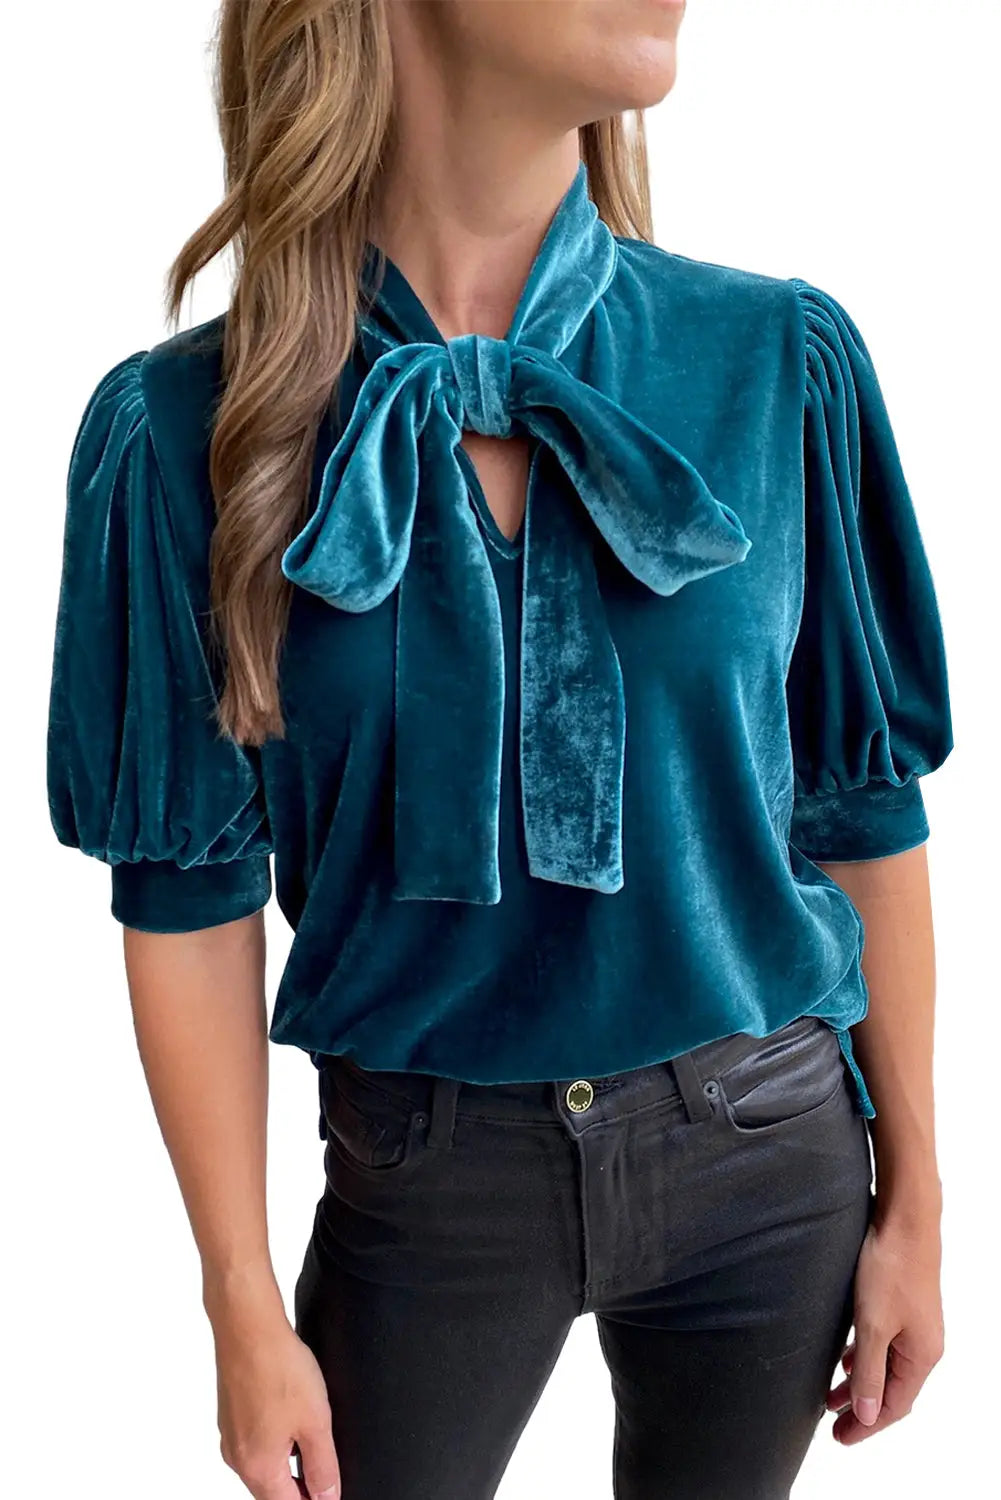 Peacock blue velvet bow tie neck short sleeve top - blouses & shirts